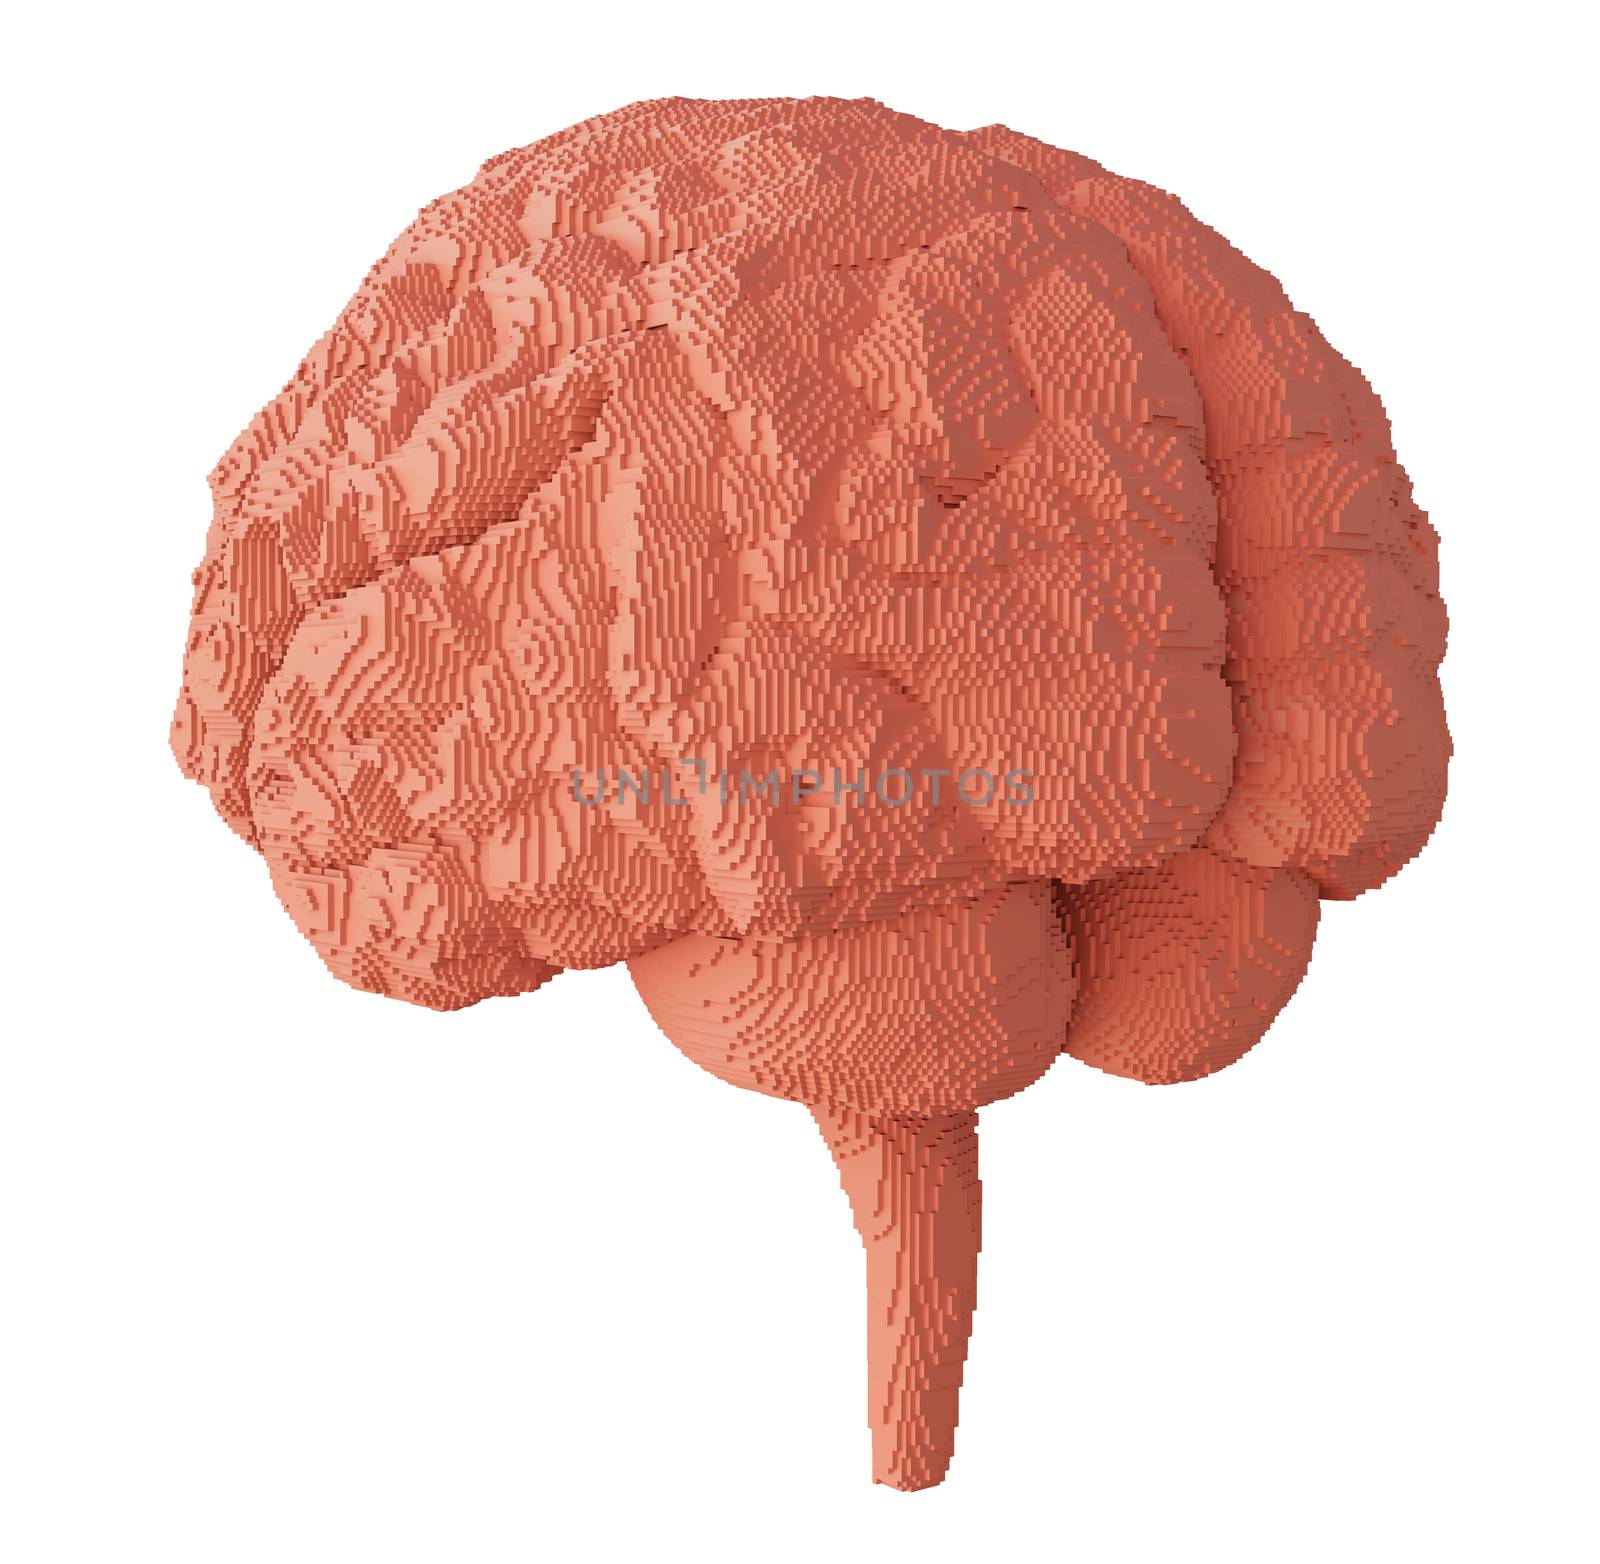 3d rendered brain isolated on white background. 3D illustration